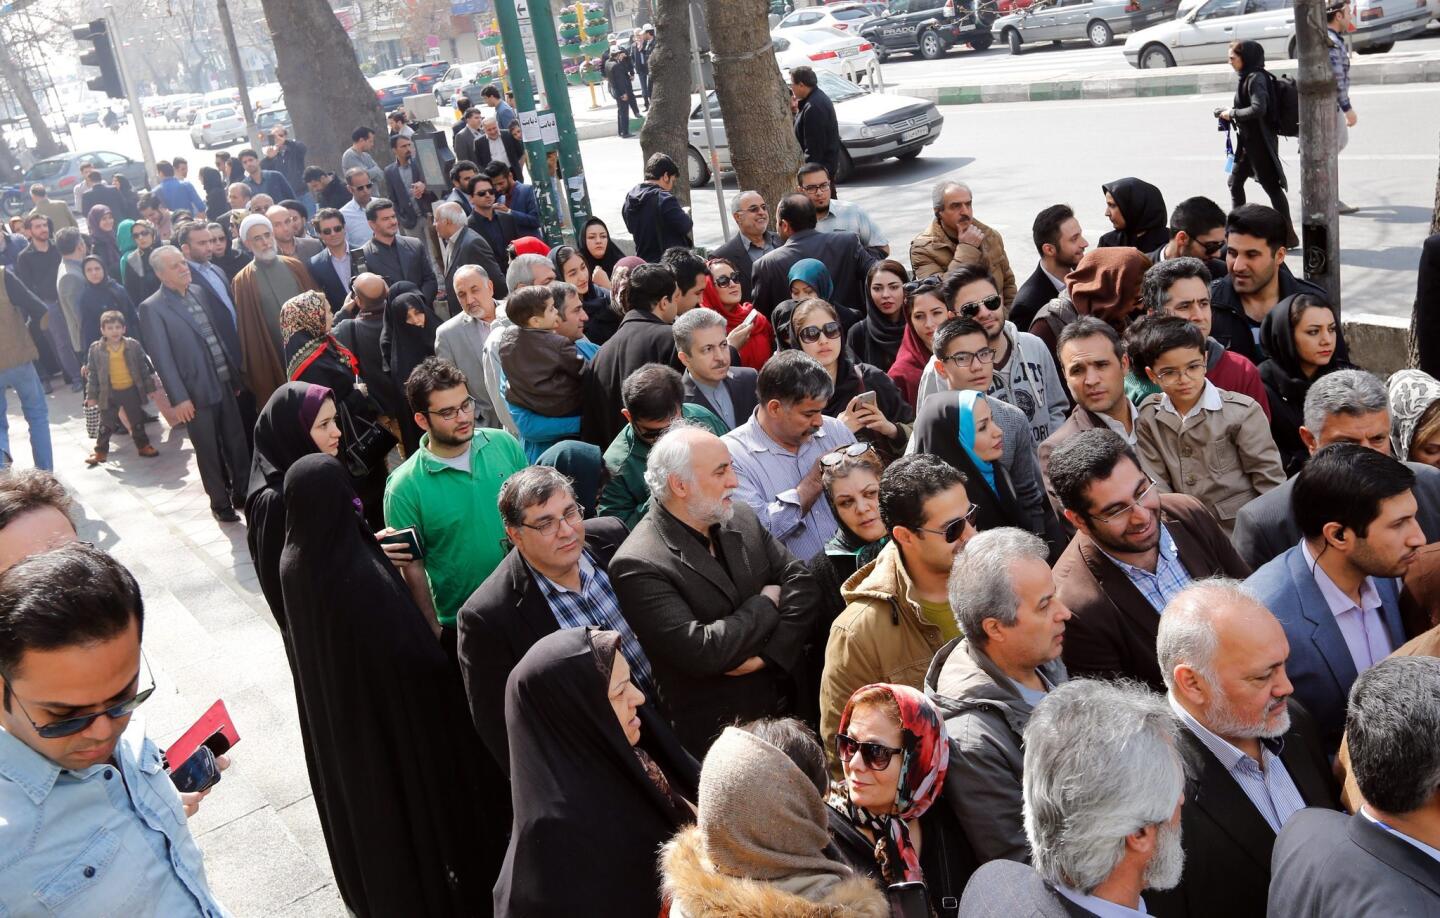 Elections underway in Iran